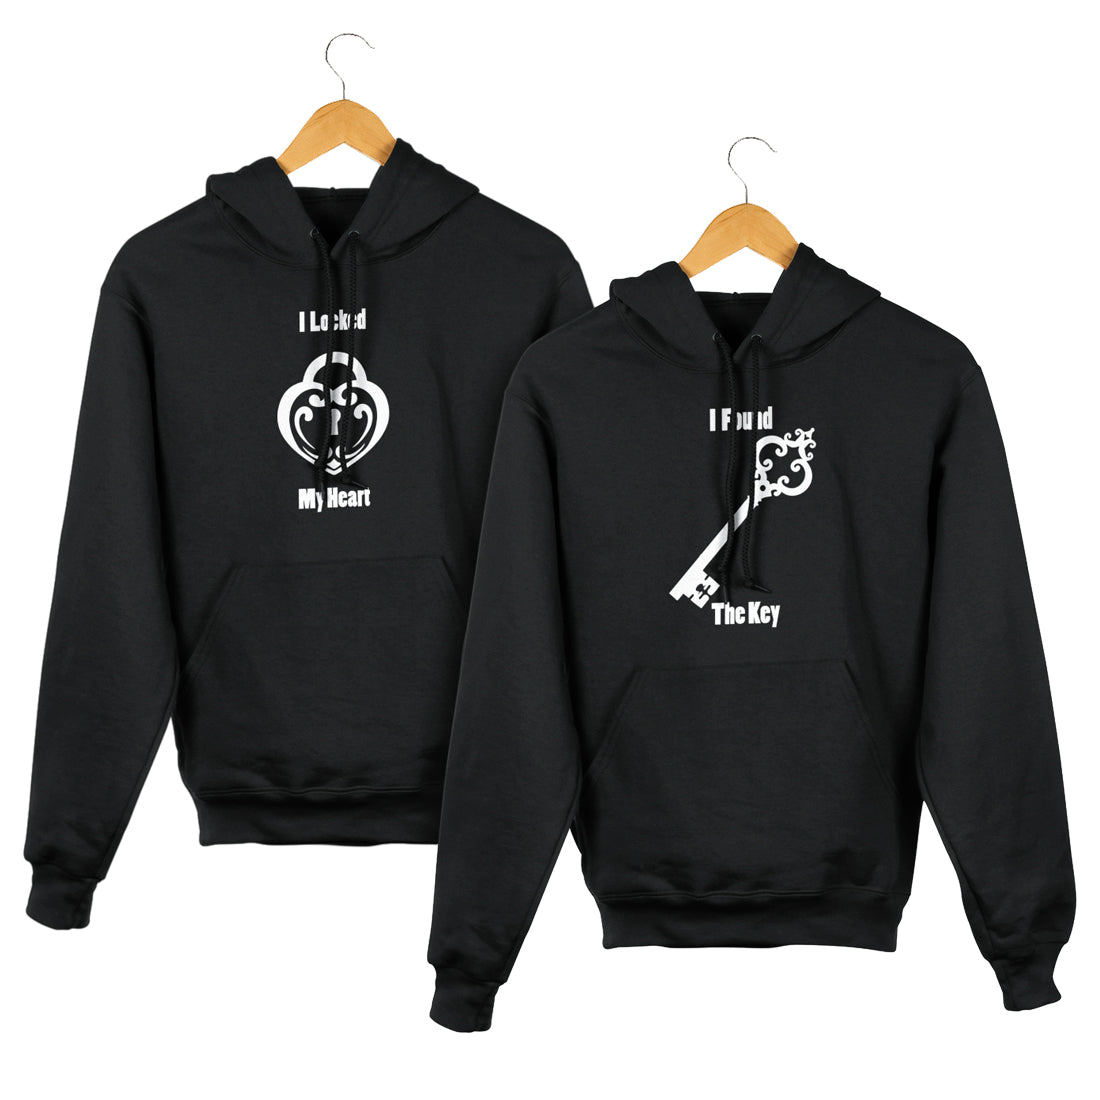 Lock and Key Matching Couple Cute Sweatshirts | Couple Hoodies- Black